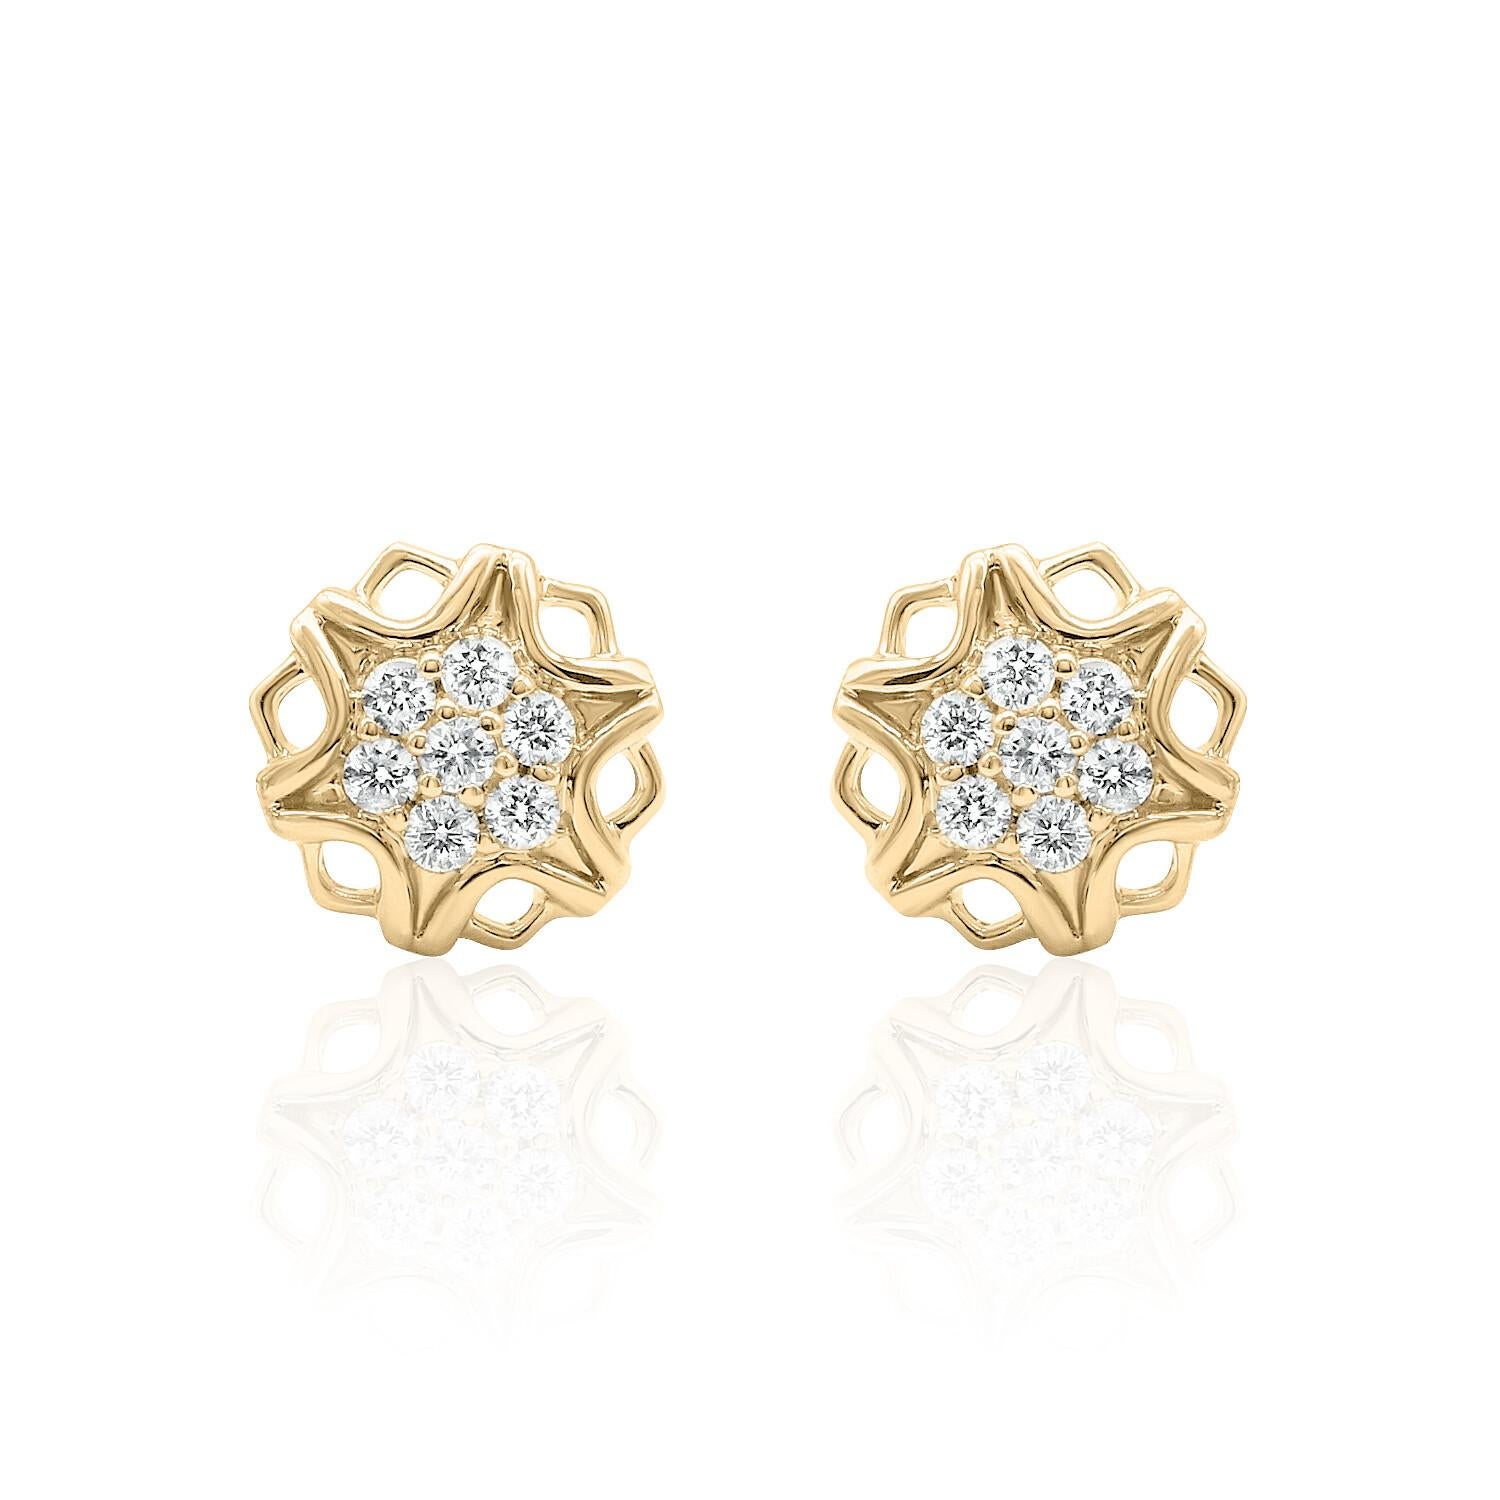 Round Cut Framed Star Diamond Earrings 14K White, Yellow, and Rose Gold